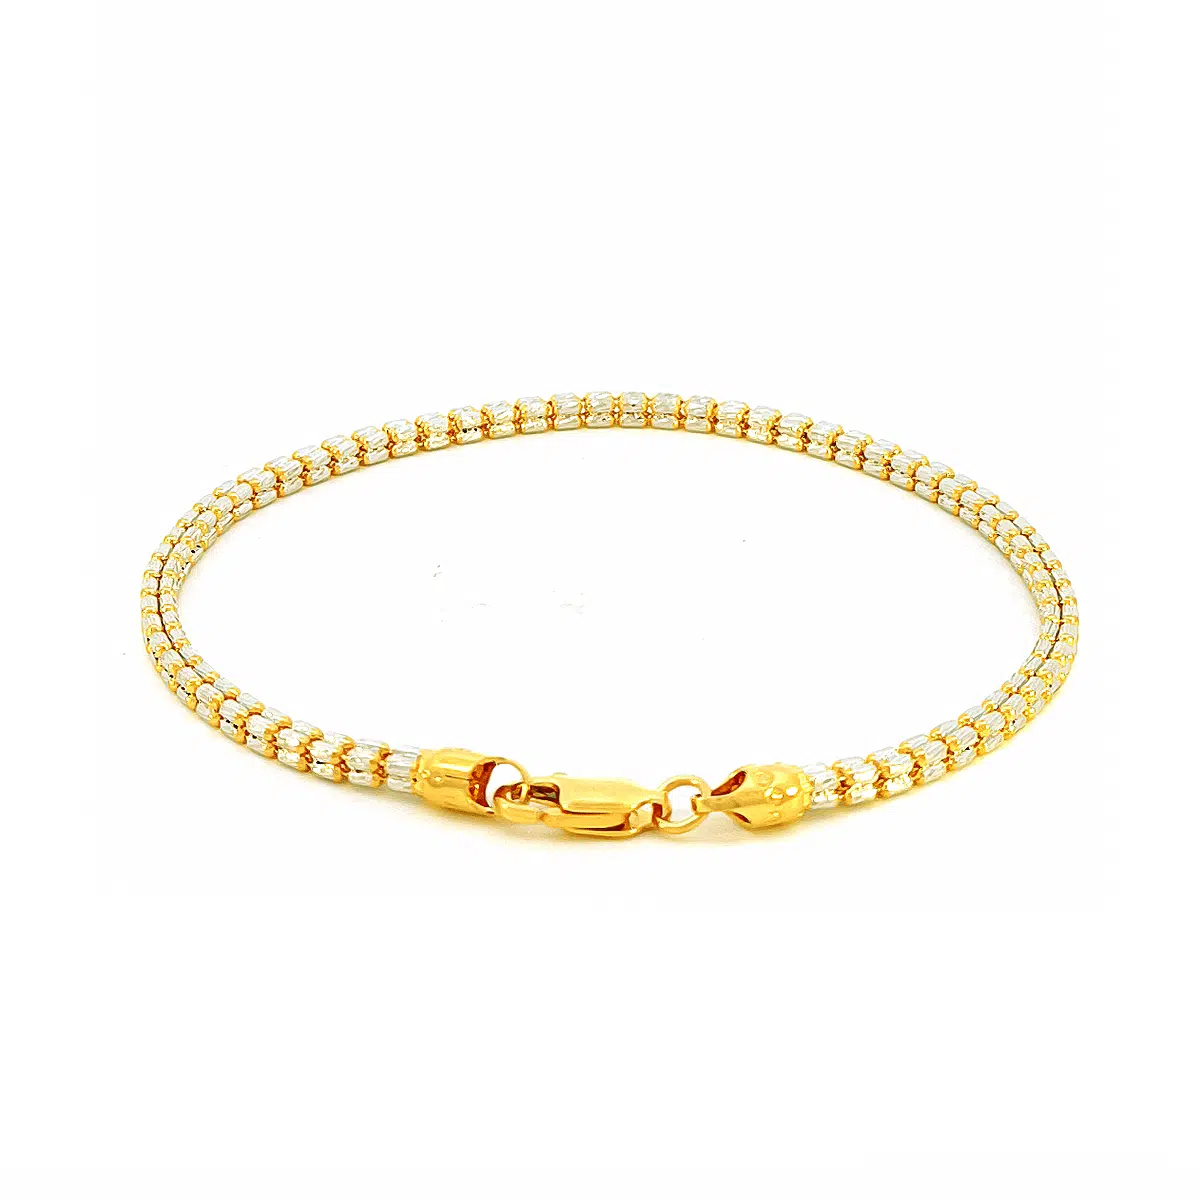 Buy online 22ct gold ladies woven bracelet by PureJewels